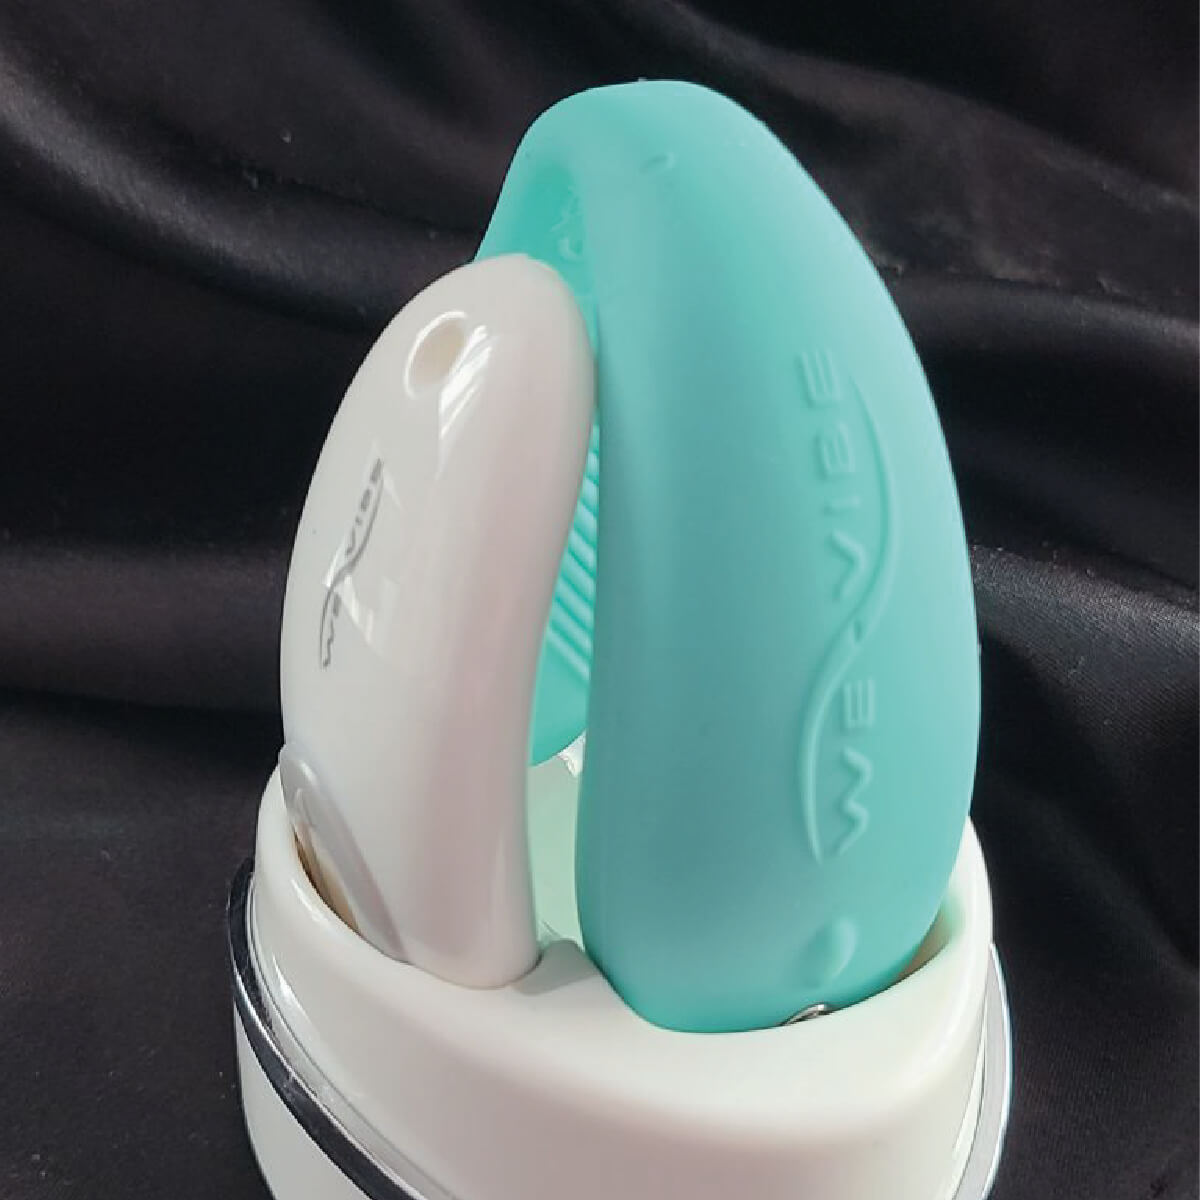 The sensational egg vibrator Sync by We-Vibe - Product image